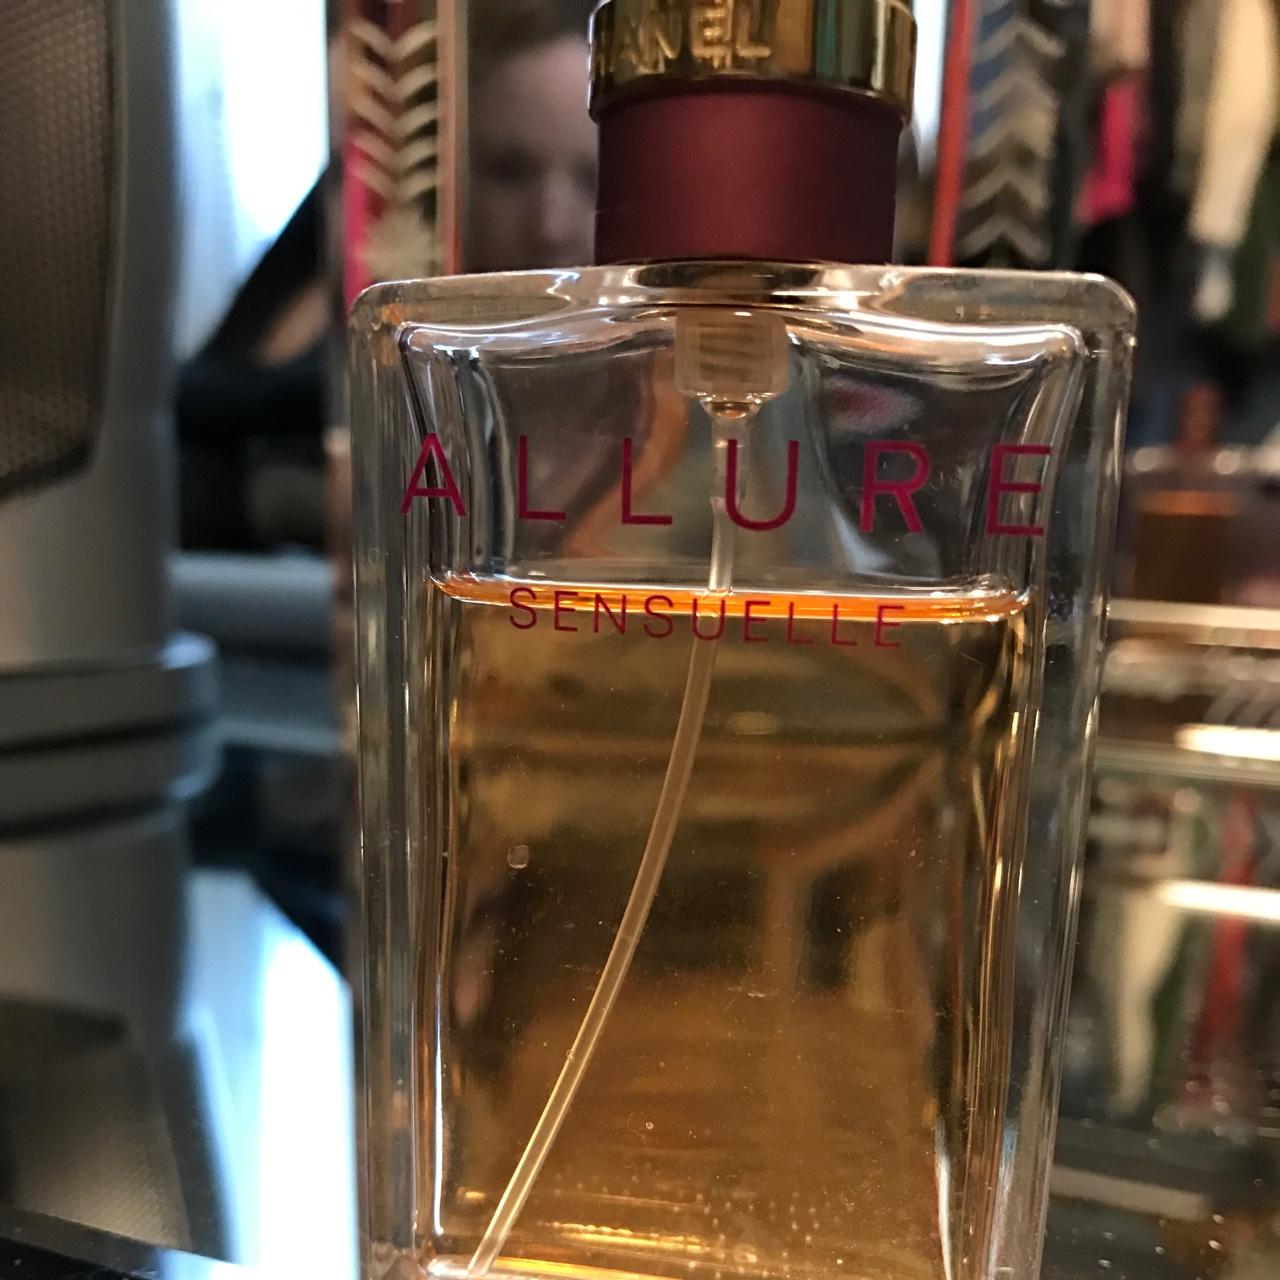 Channel Allure Sensuelle Eau Parfum. 35ml bottle, - Depop